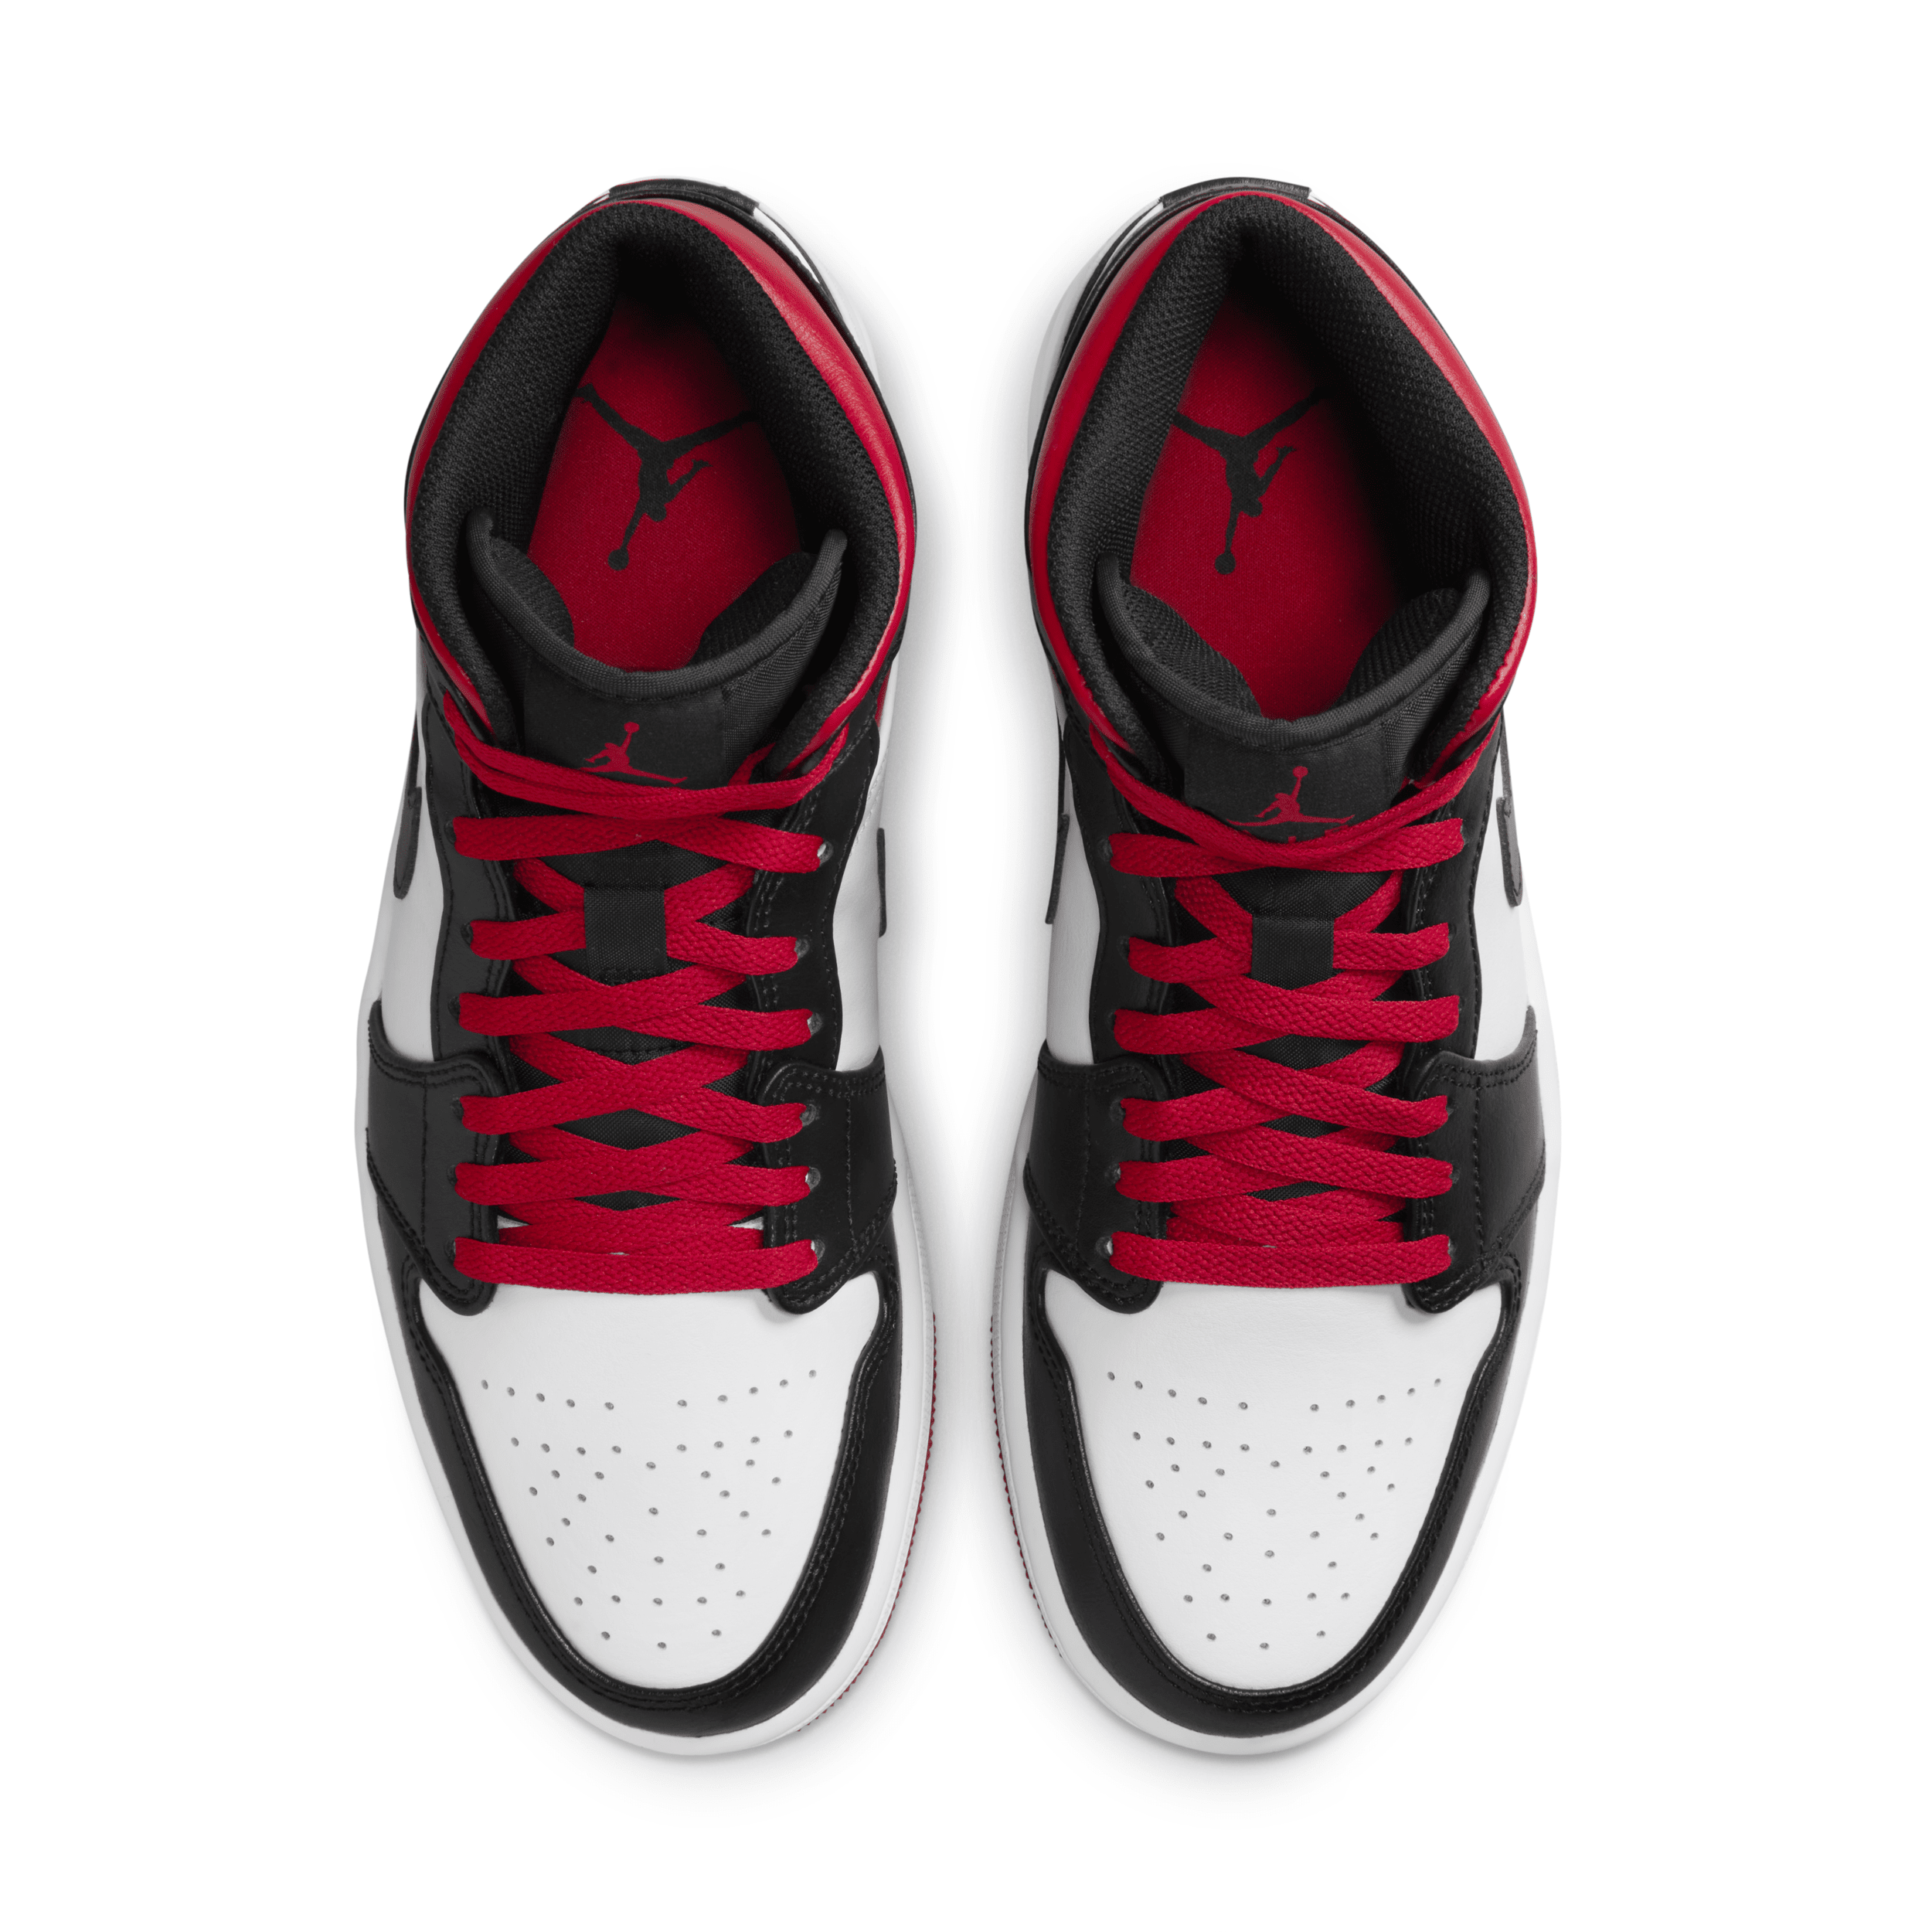 Air Jordan 1 Mid Men's Shoes - $60.77